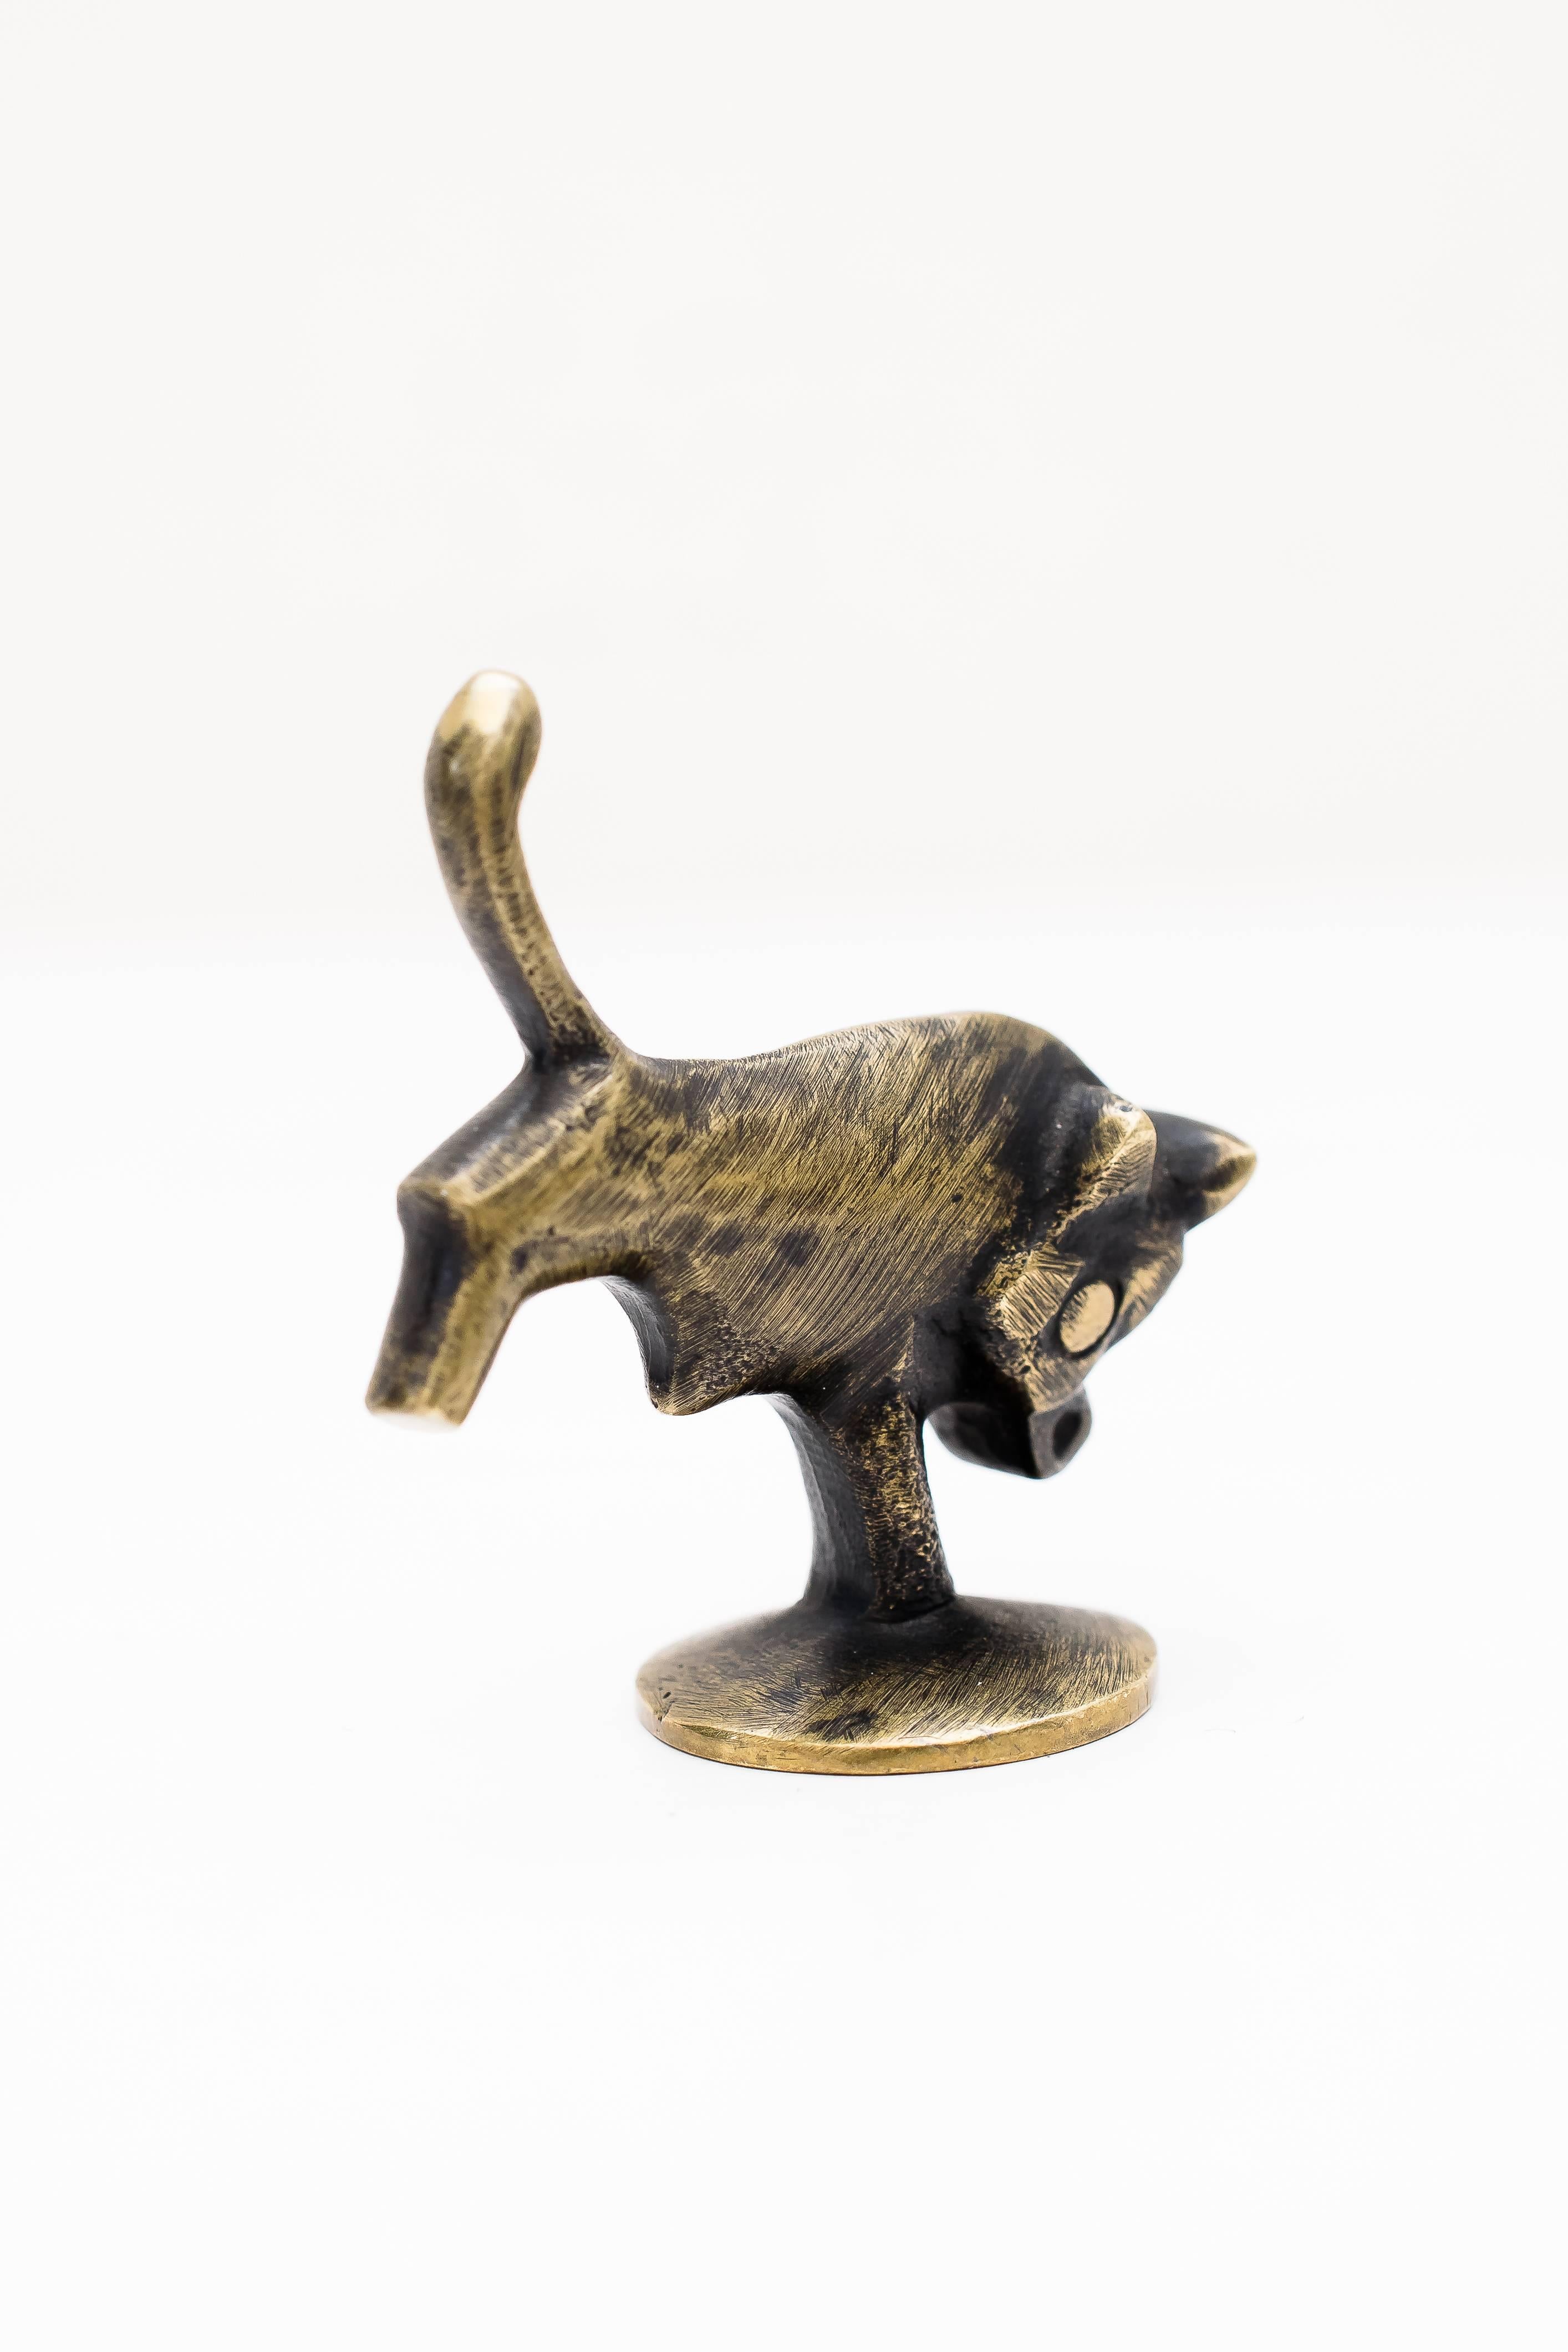 Blackened Bull Figurine by Walter Bosse